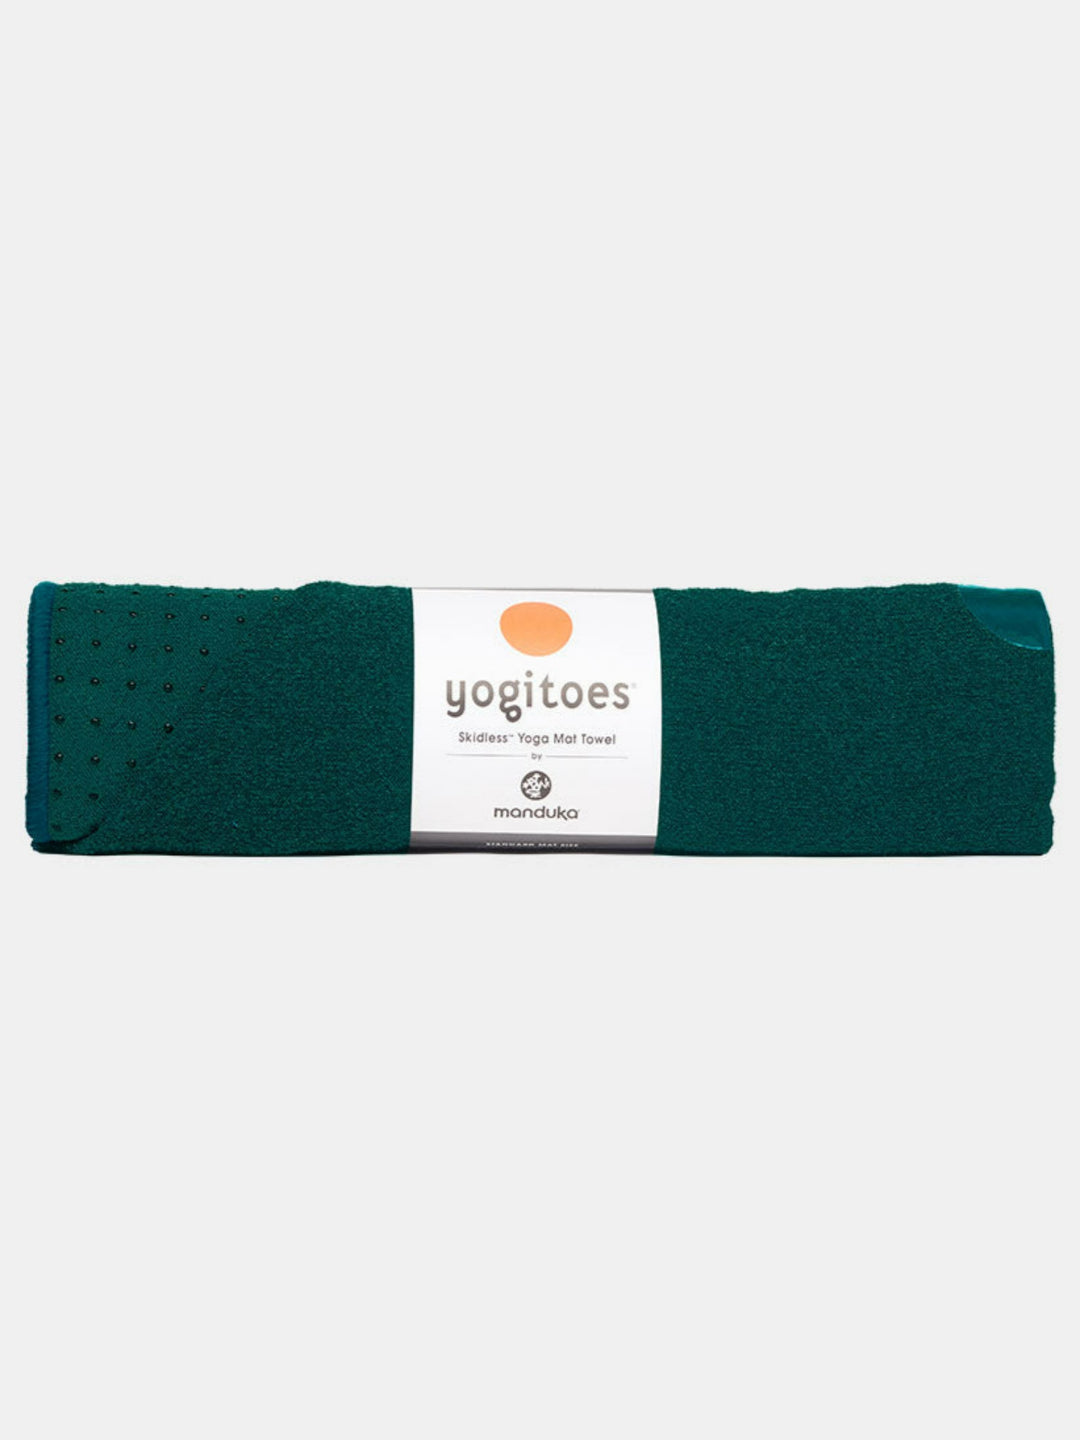 Yogitoes non-slip yoga mat towels